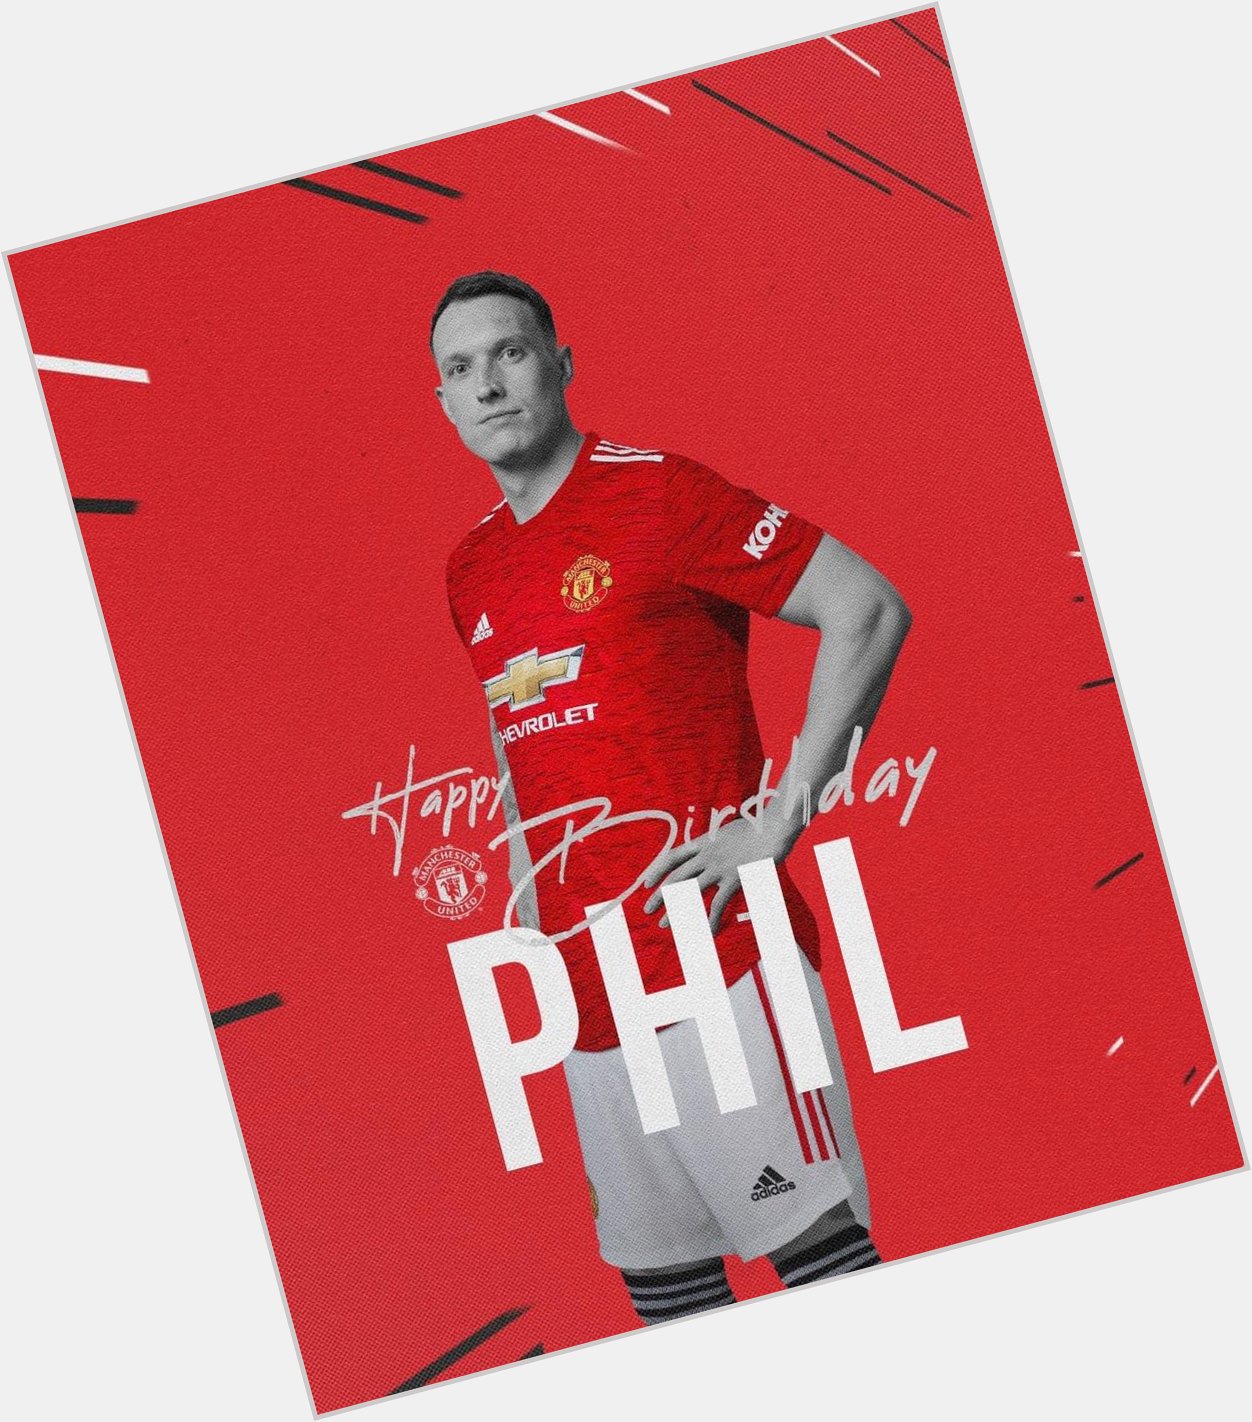 Manchester United !!
Happy 29th birthday, Phil Jones! 